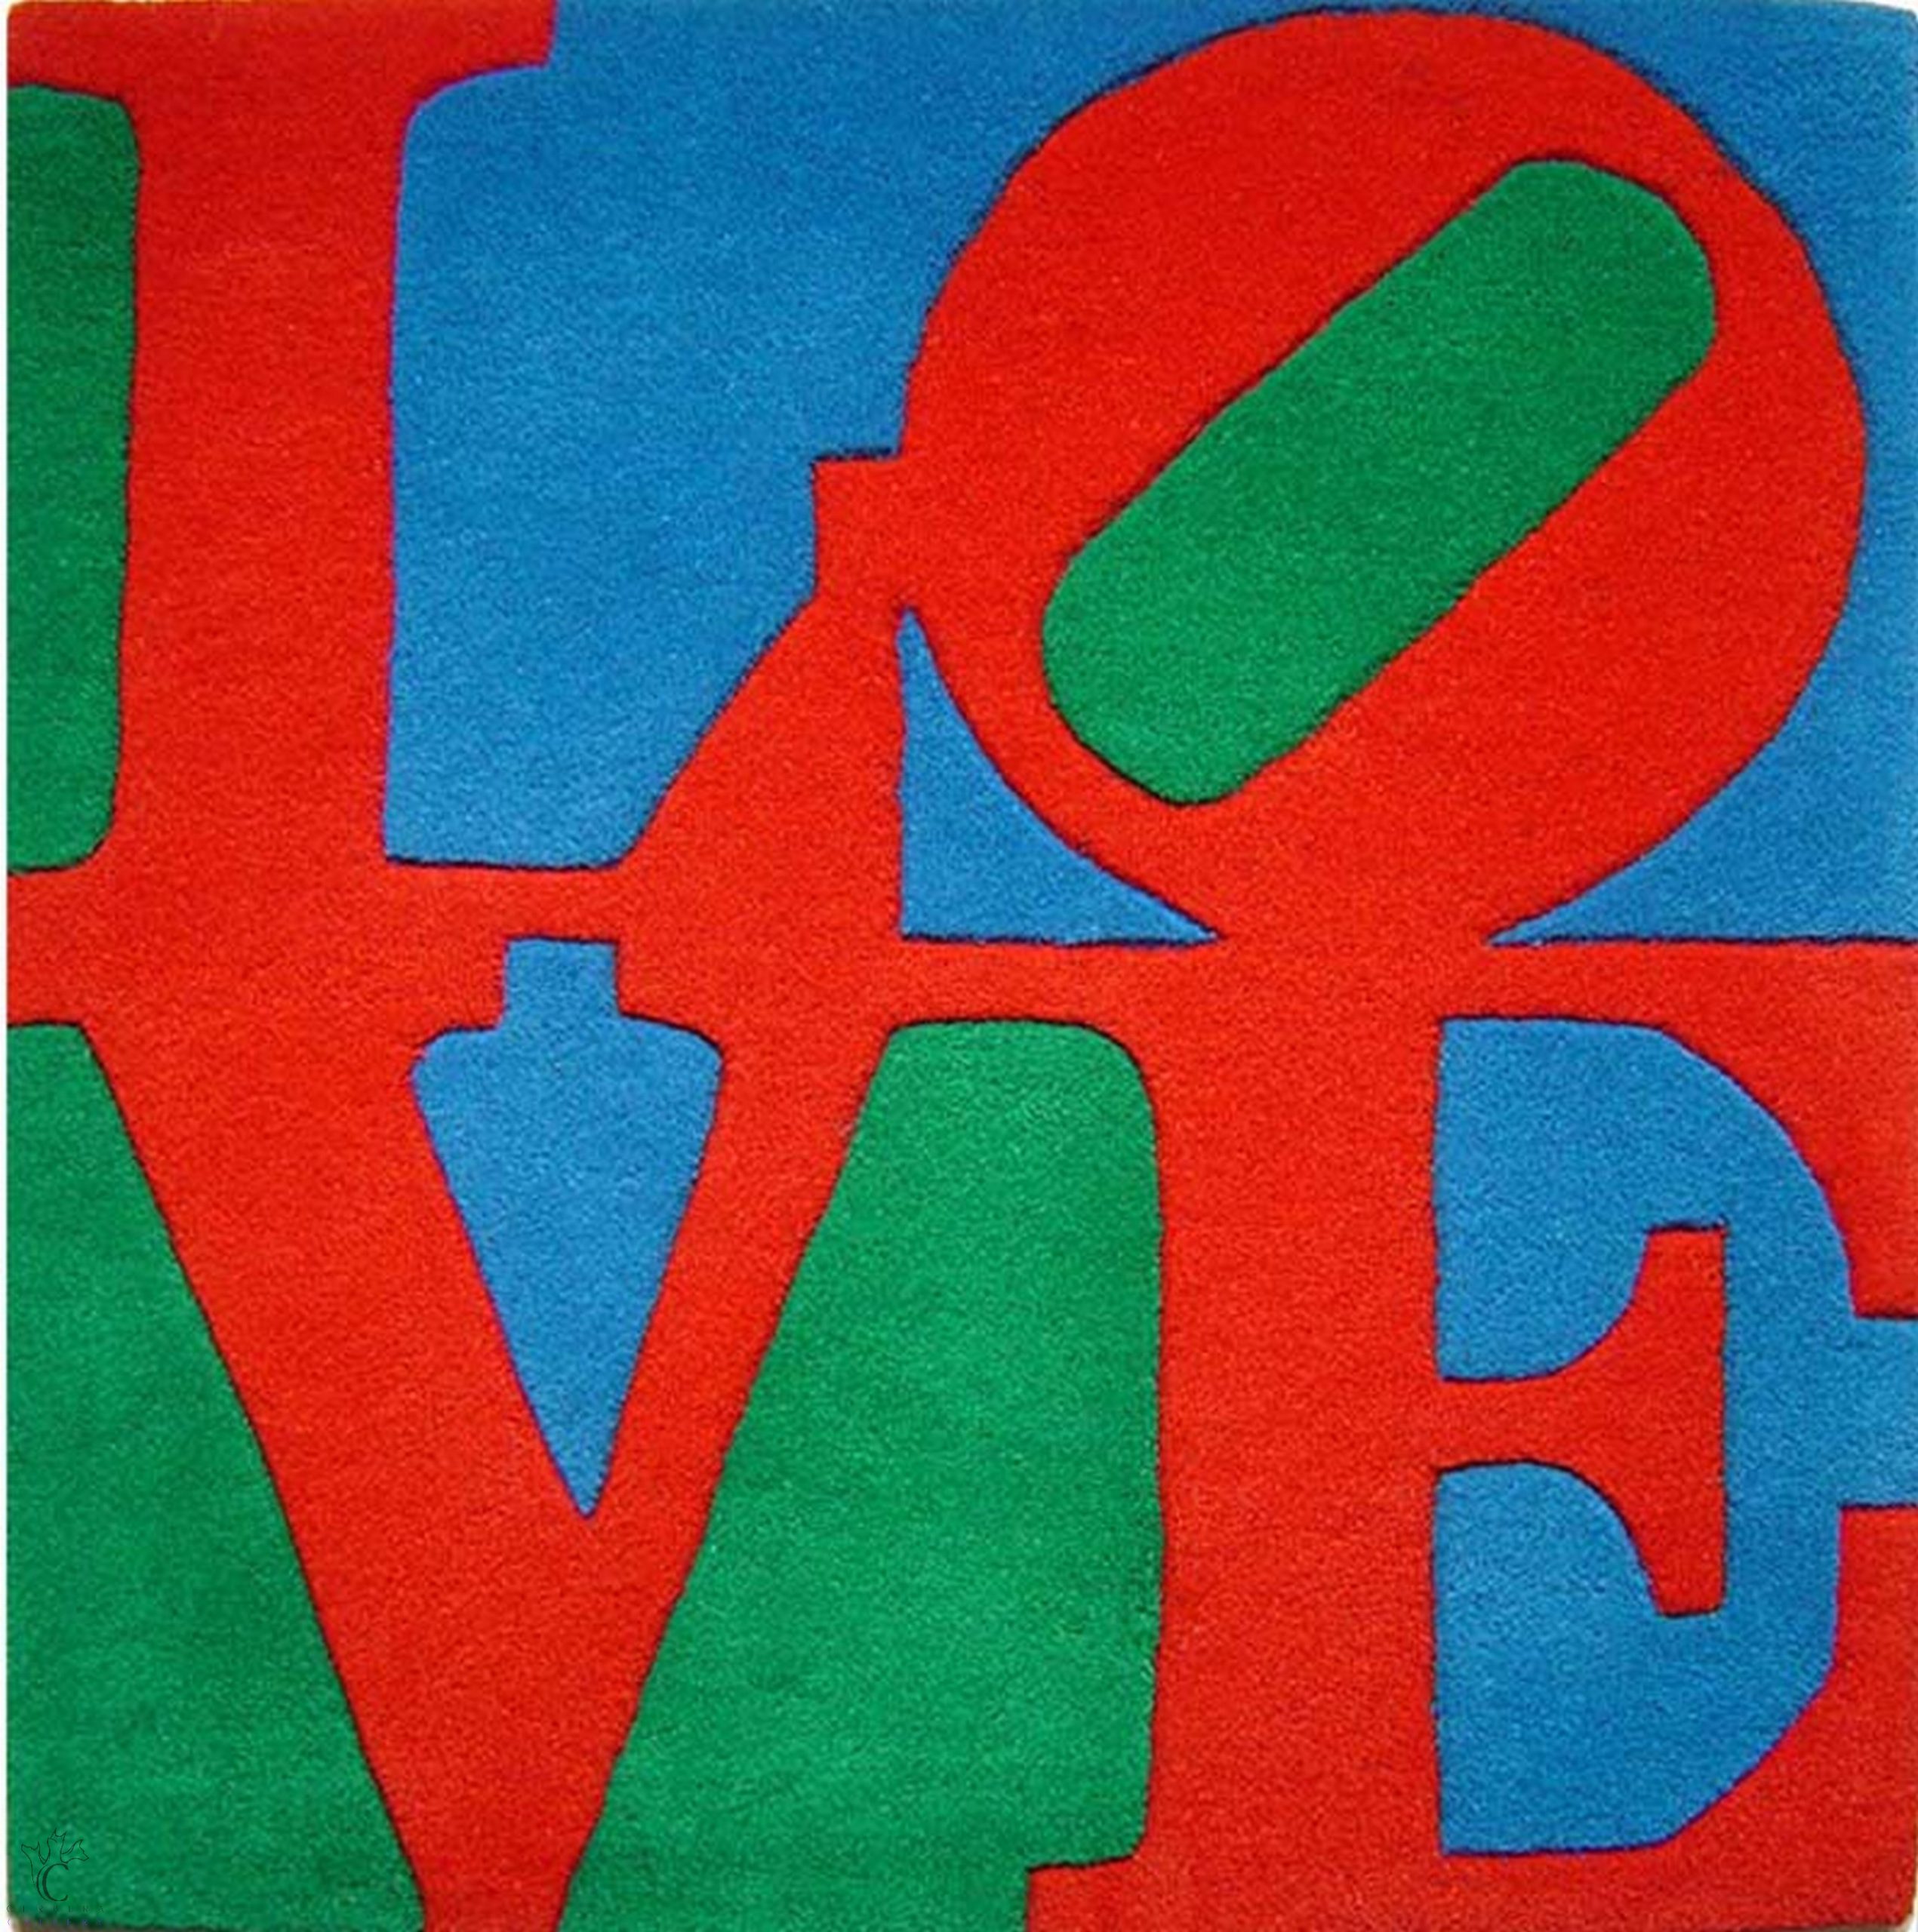 Classic LOVE - Robert Indiana